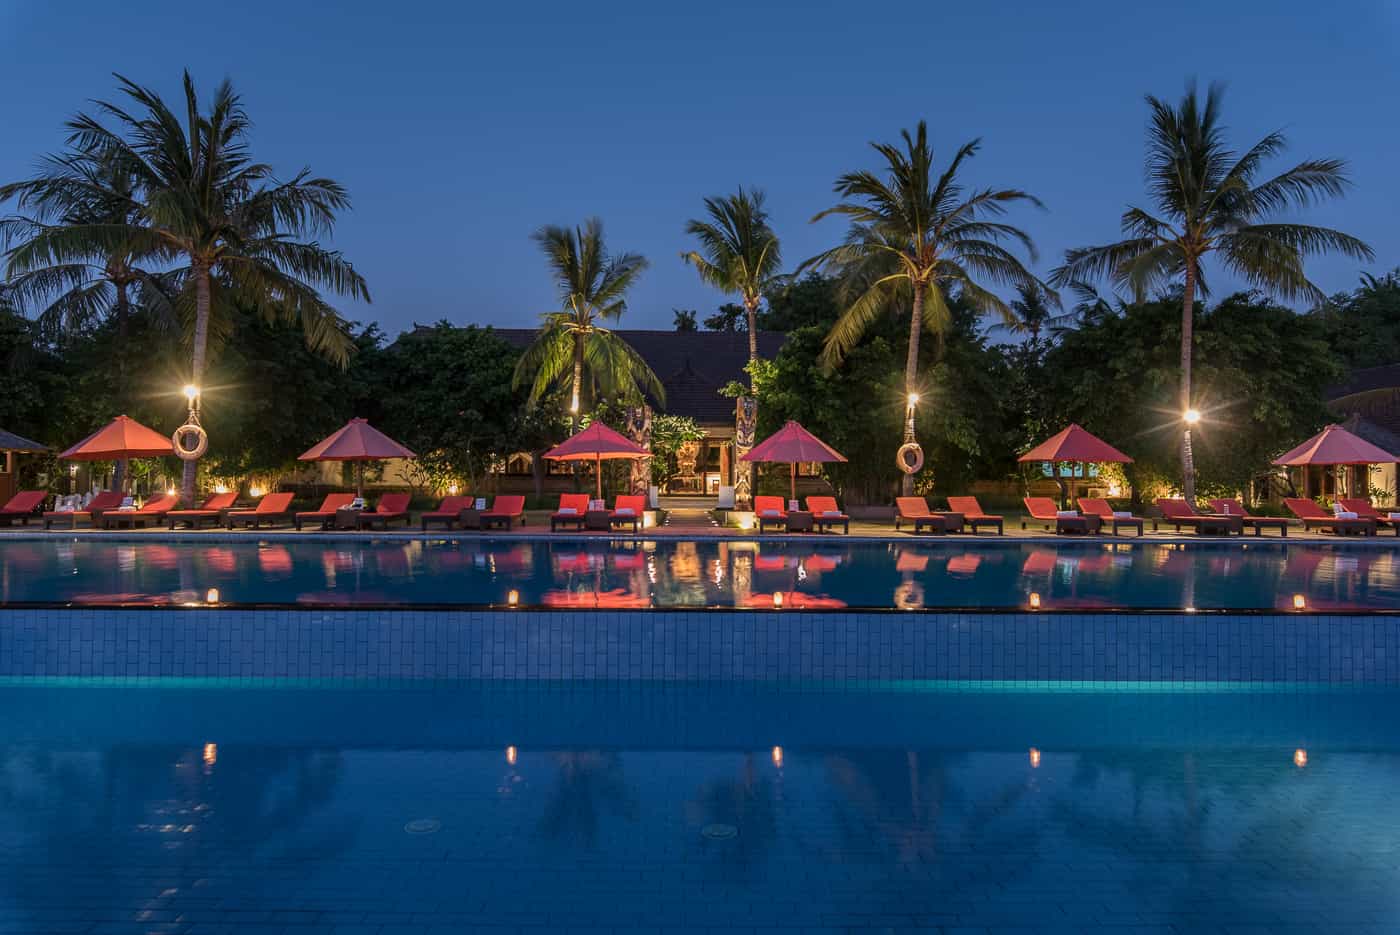 Evening pool view at Hotel Ombak Sunset in Gili Trawangan Island of Lombok Indonesia